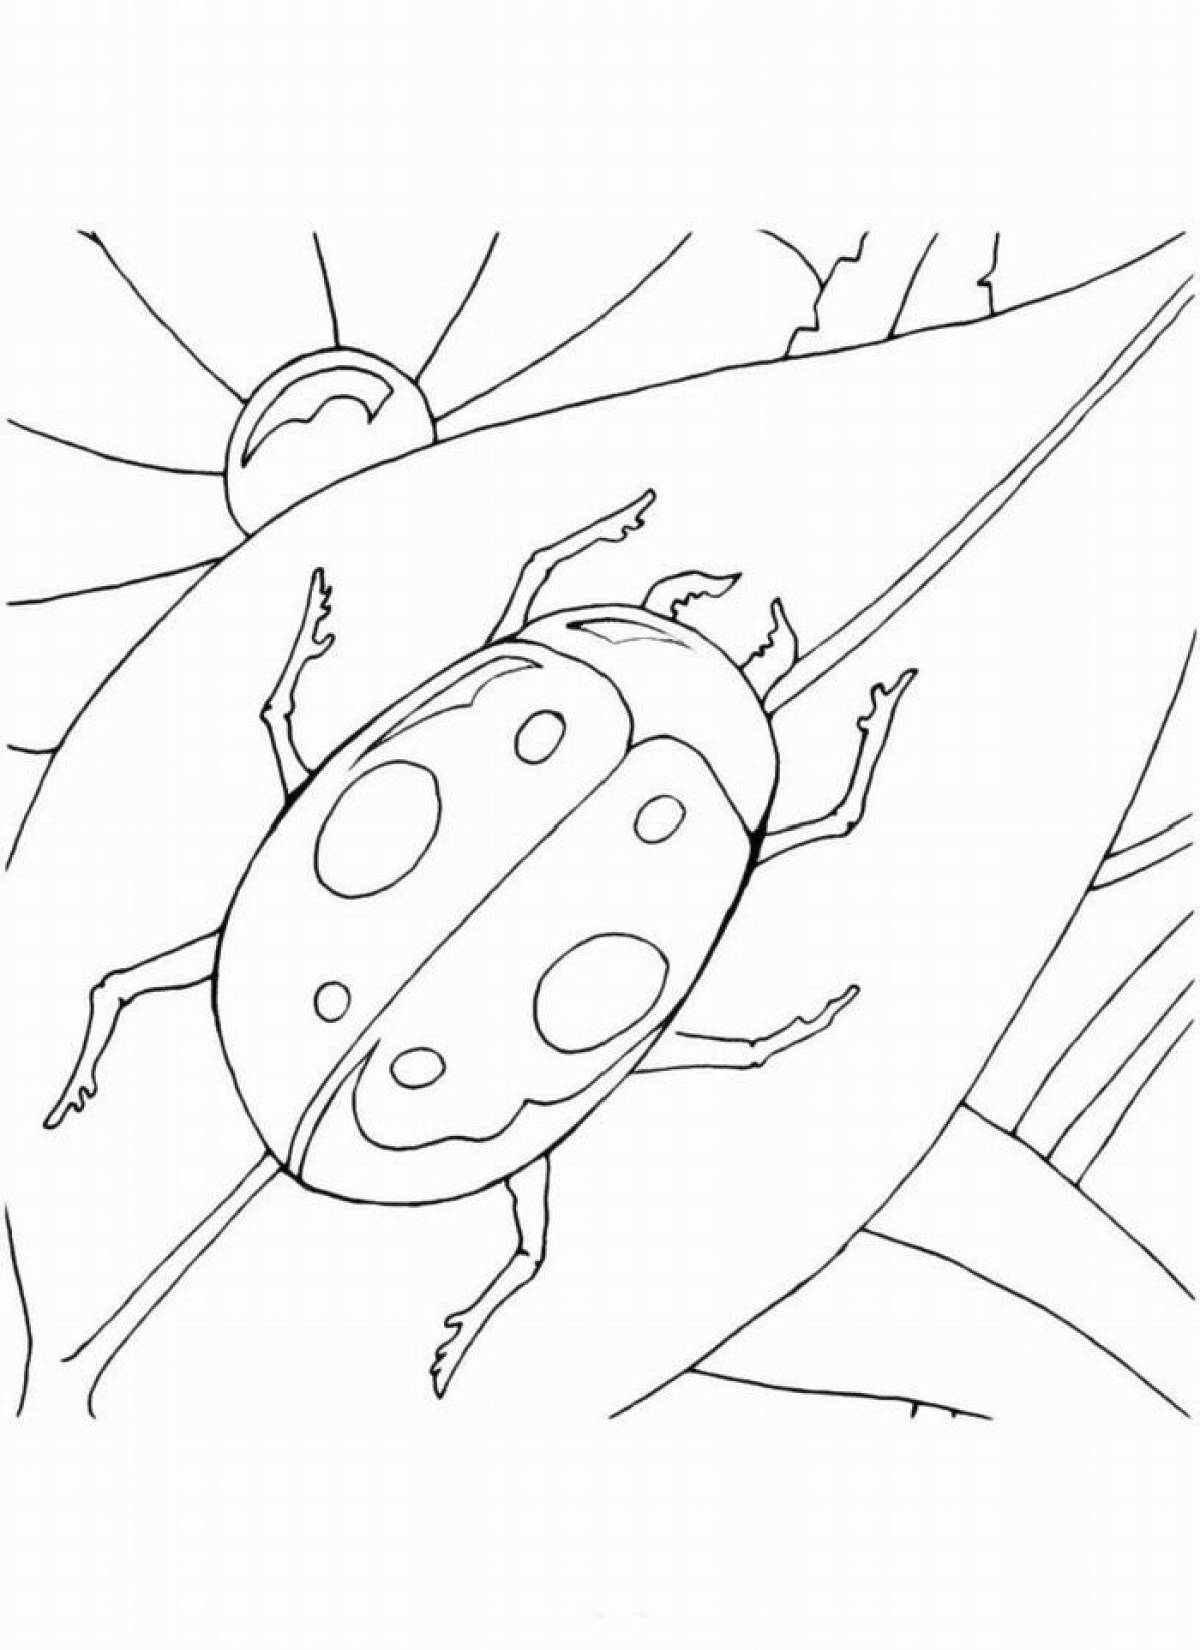 Beetle crawling on a leaf